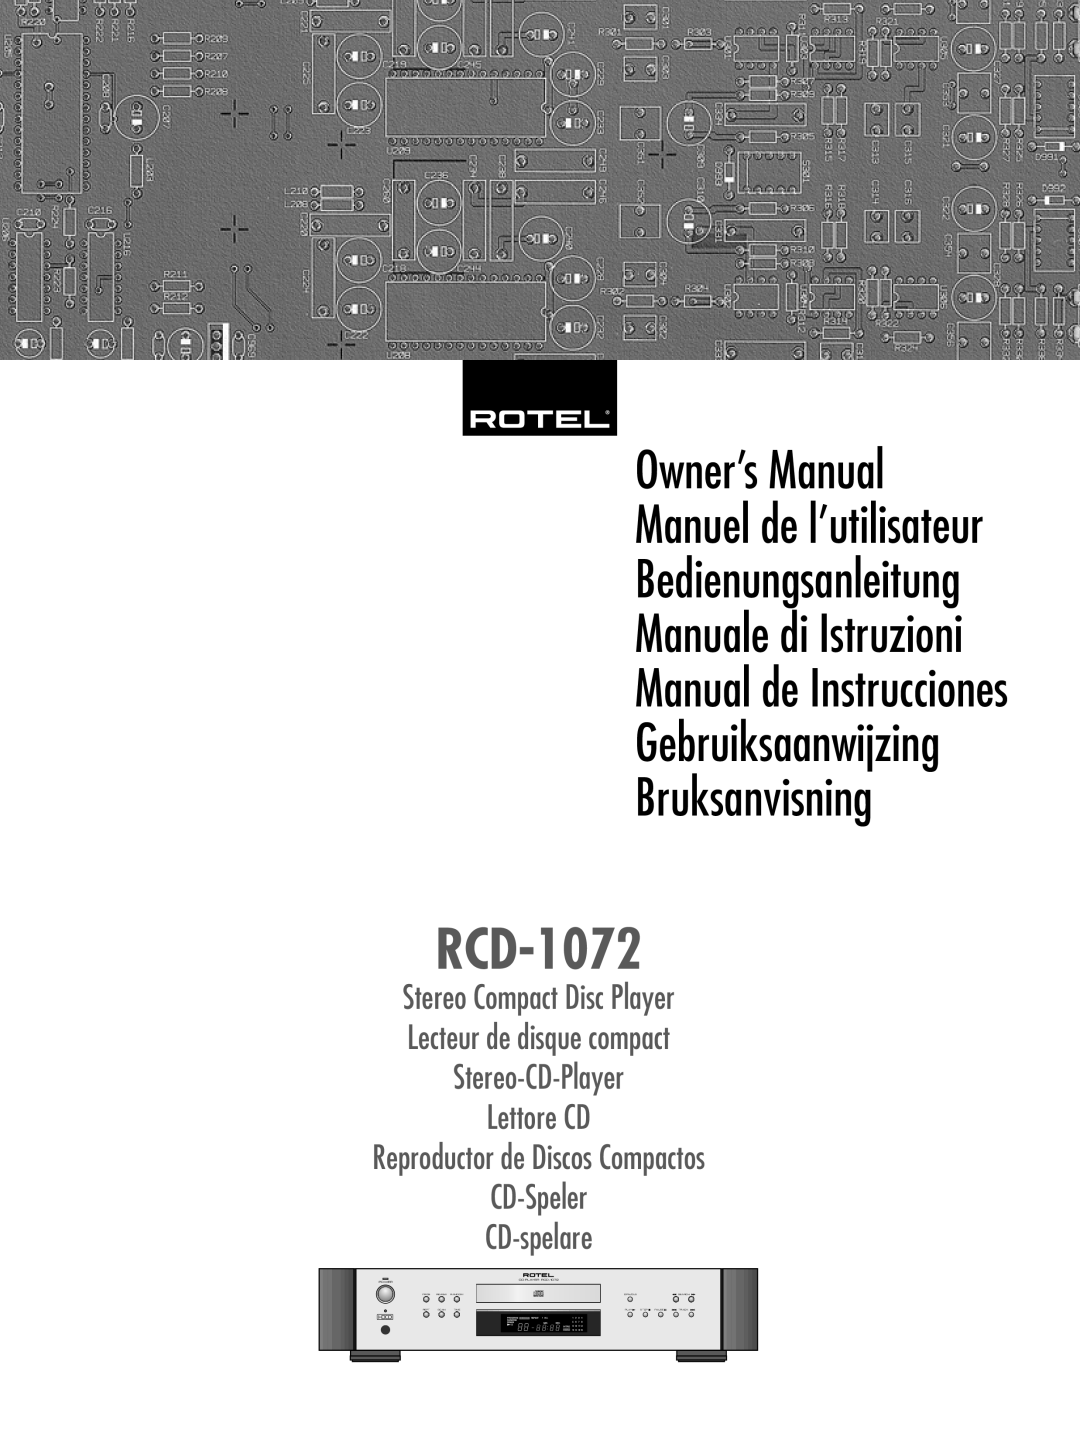 Rotel RCD-1072 owner manual Manual de Instrucciones Gebruiksaanwijzing, Bruksanvisning, Manuale di Istruzioni 